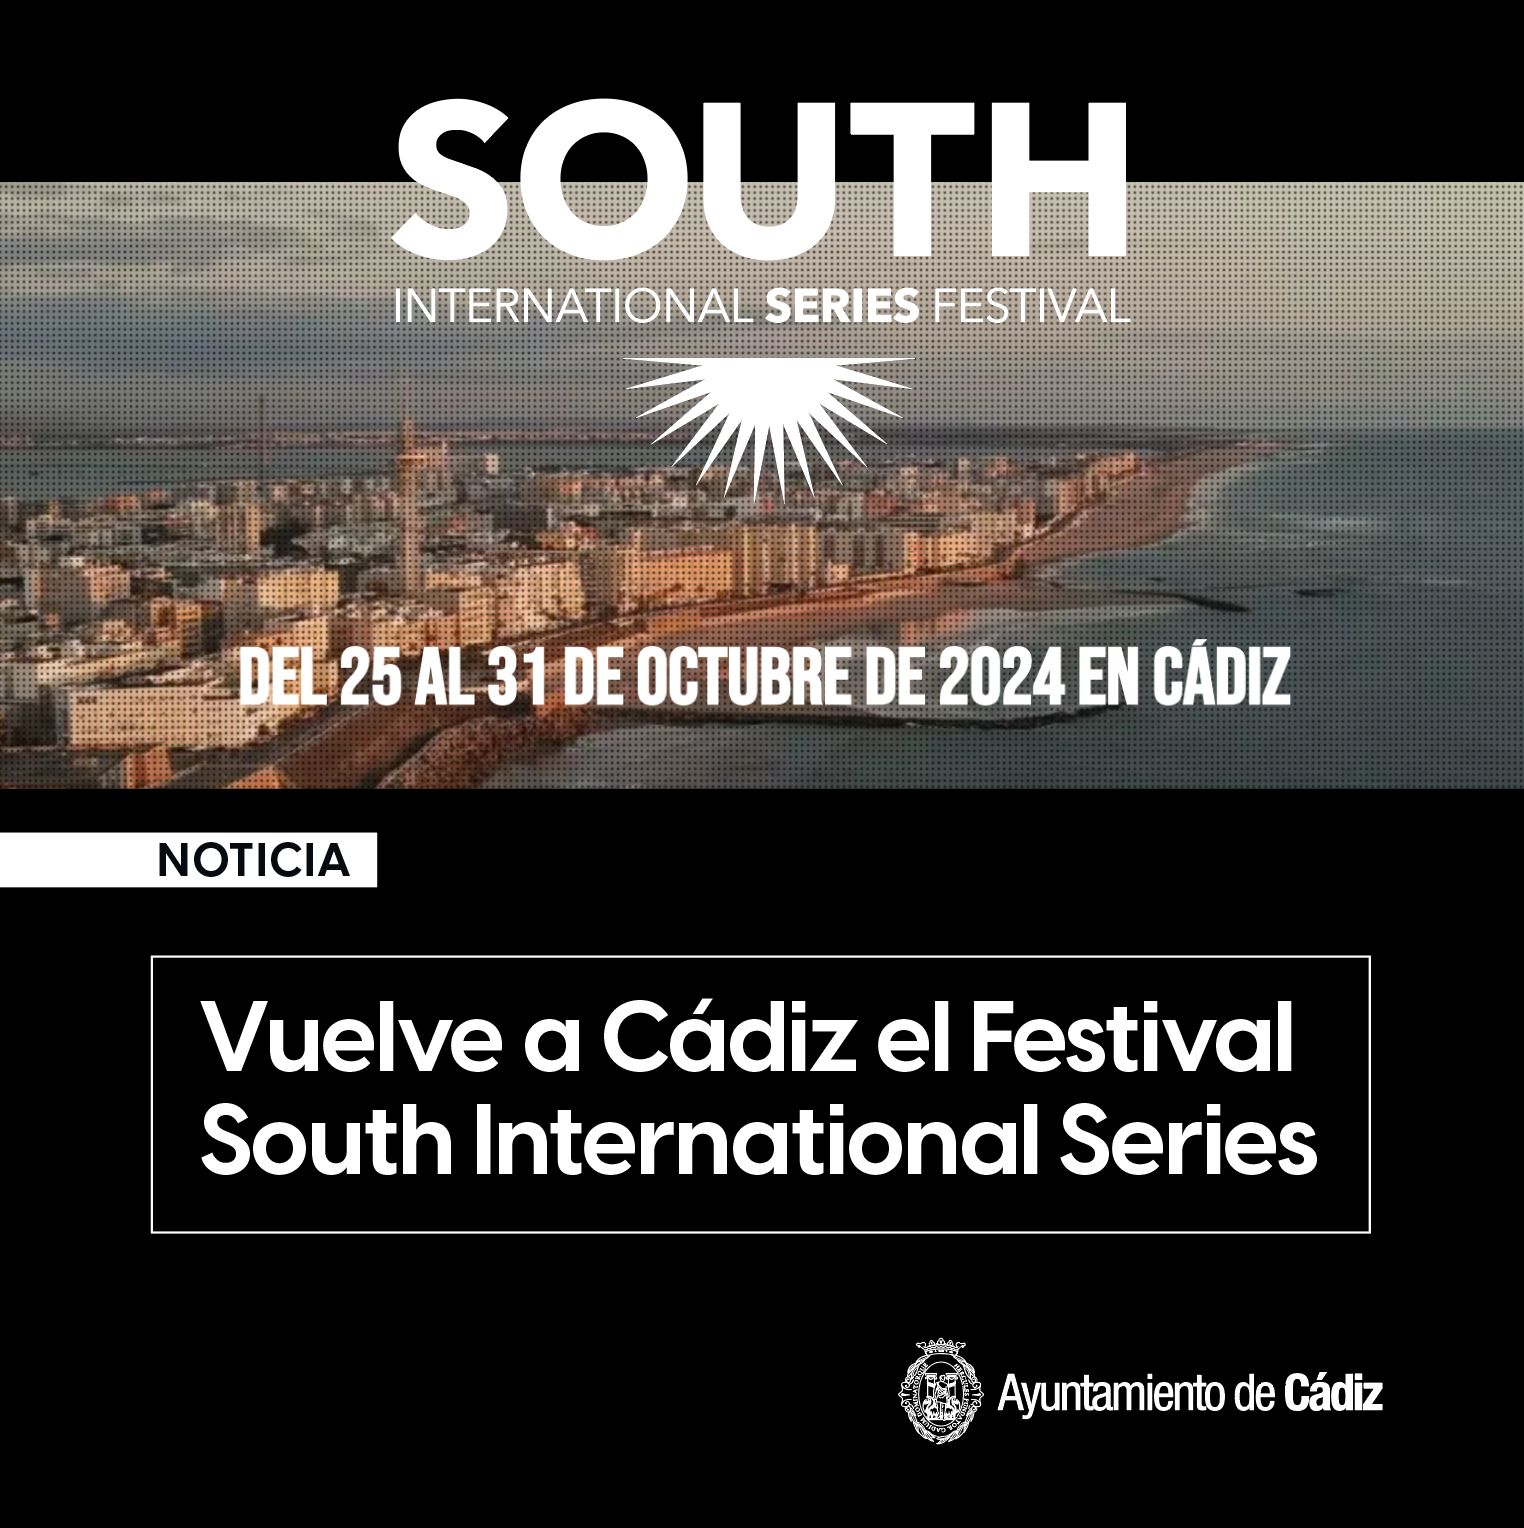 Festival Series 2024